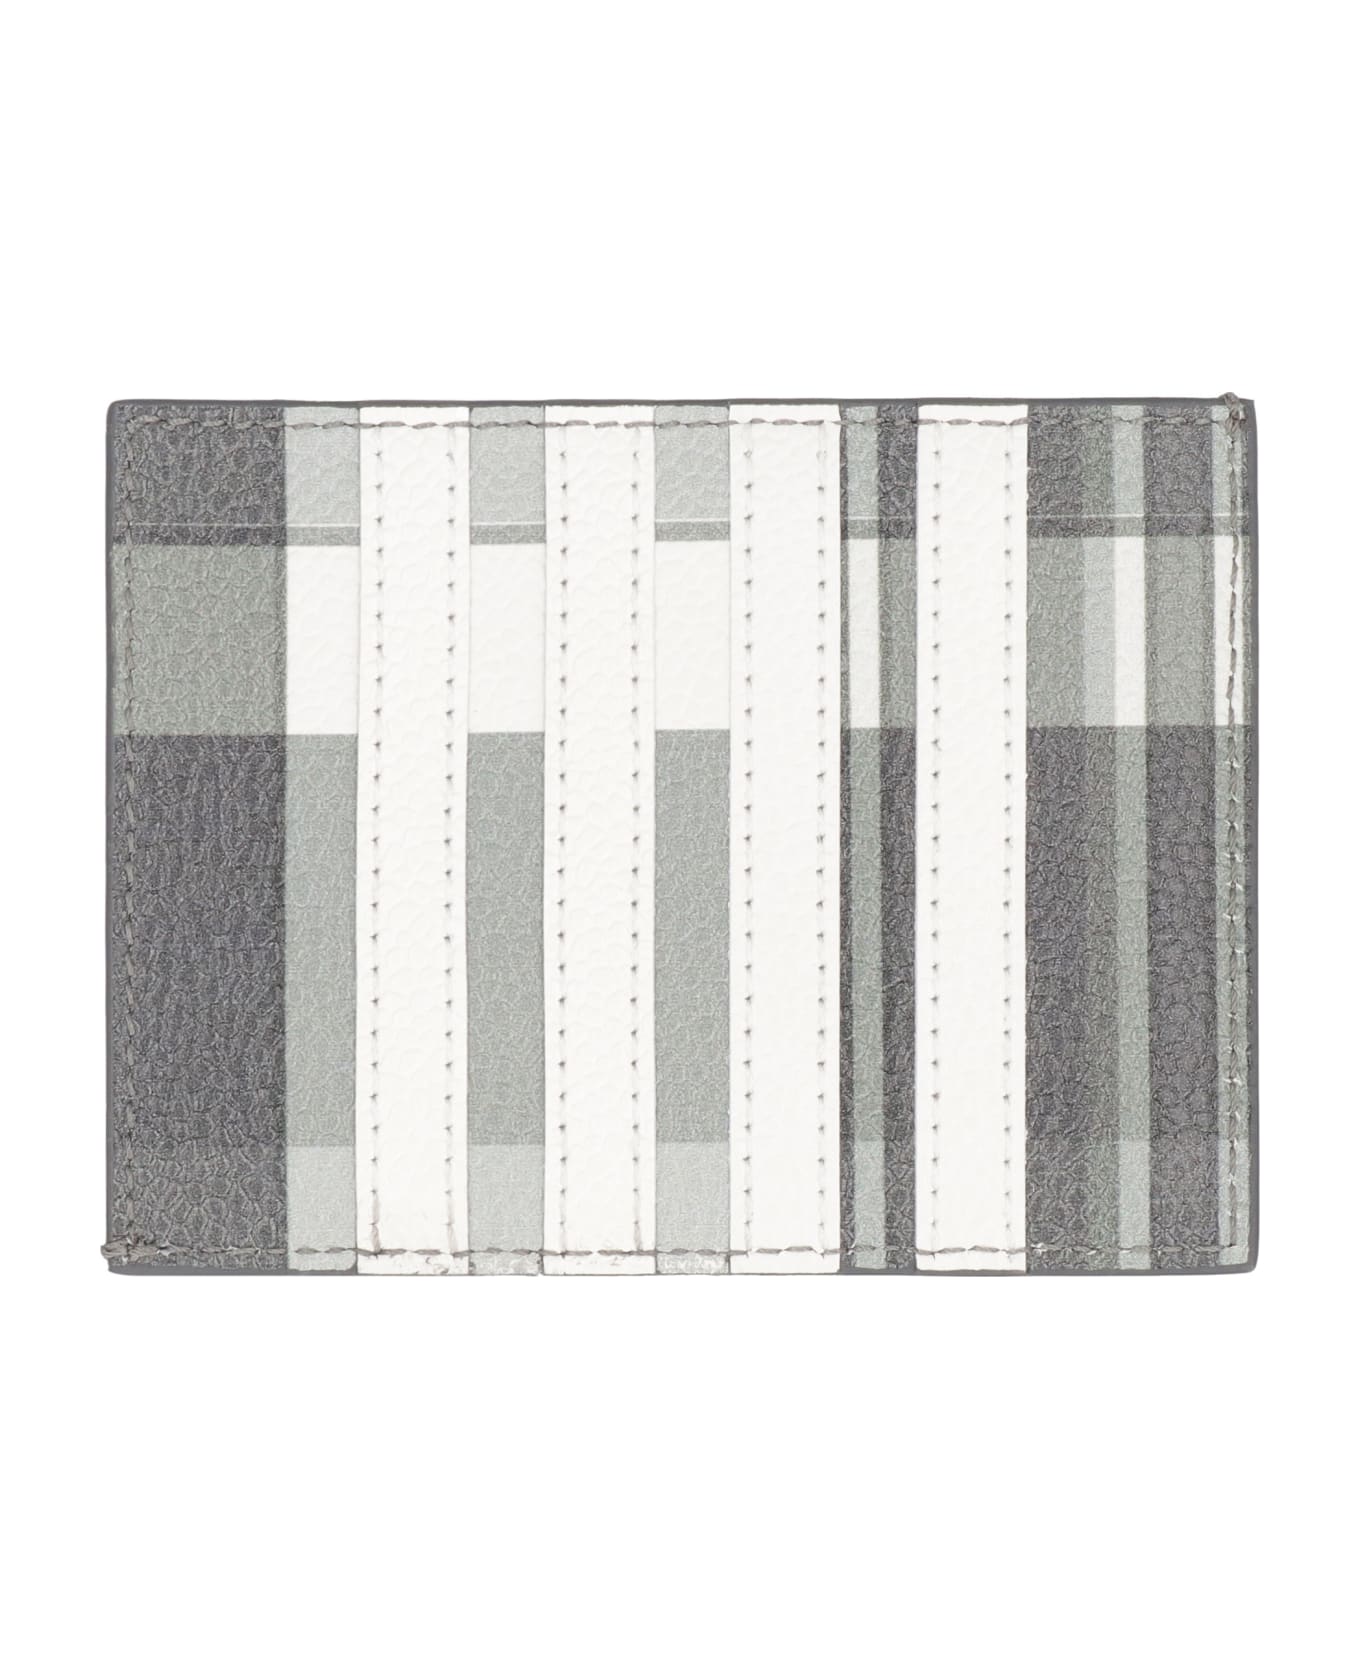 Thom Browne Printed Leather Card Holder - grey